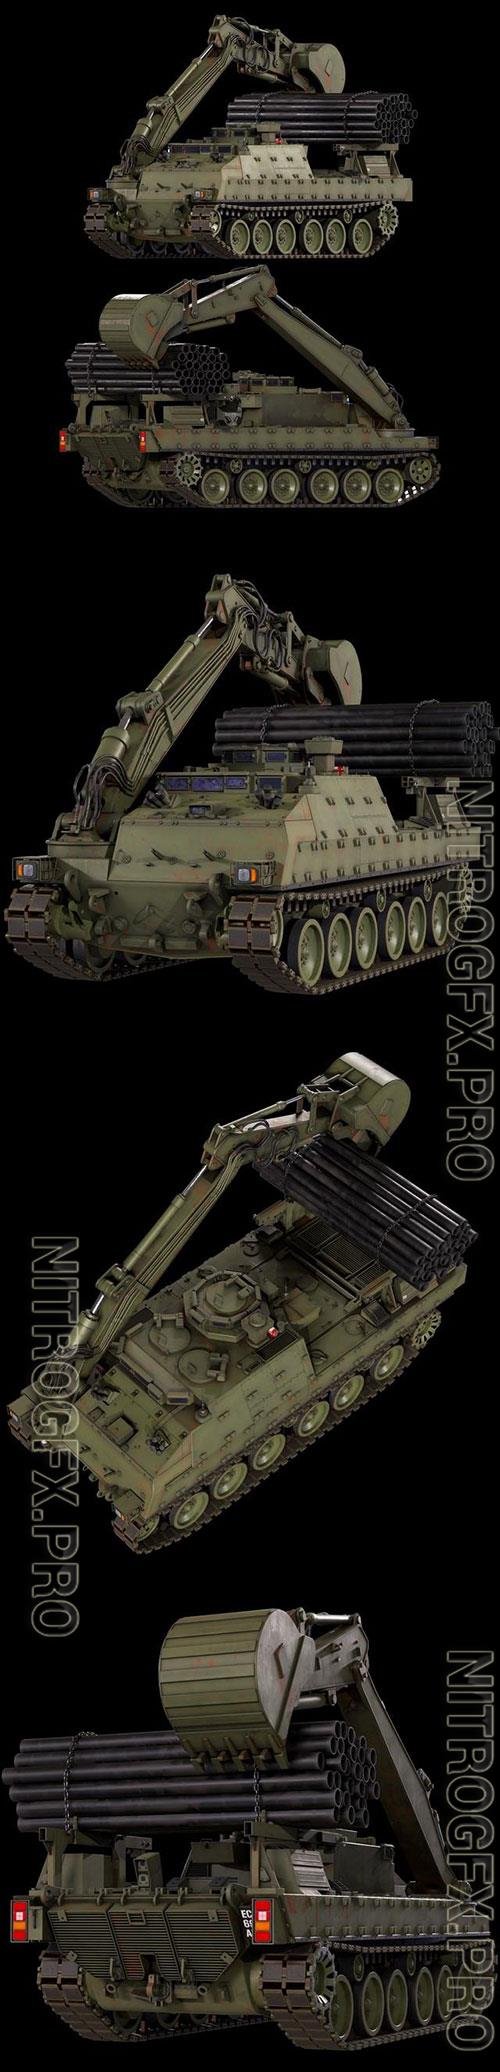 Trojan Armored Vehicle Royal Engineers 3D Model